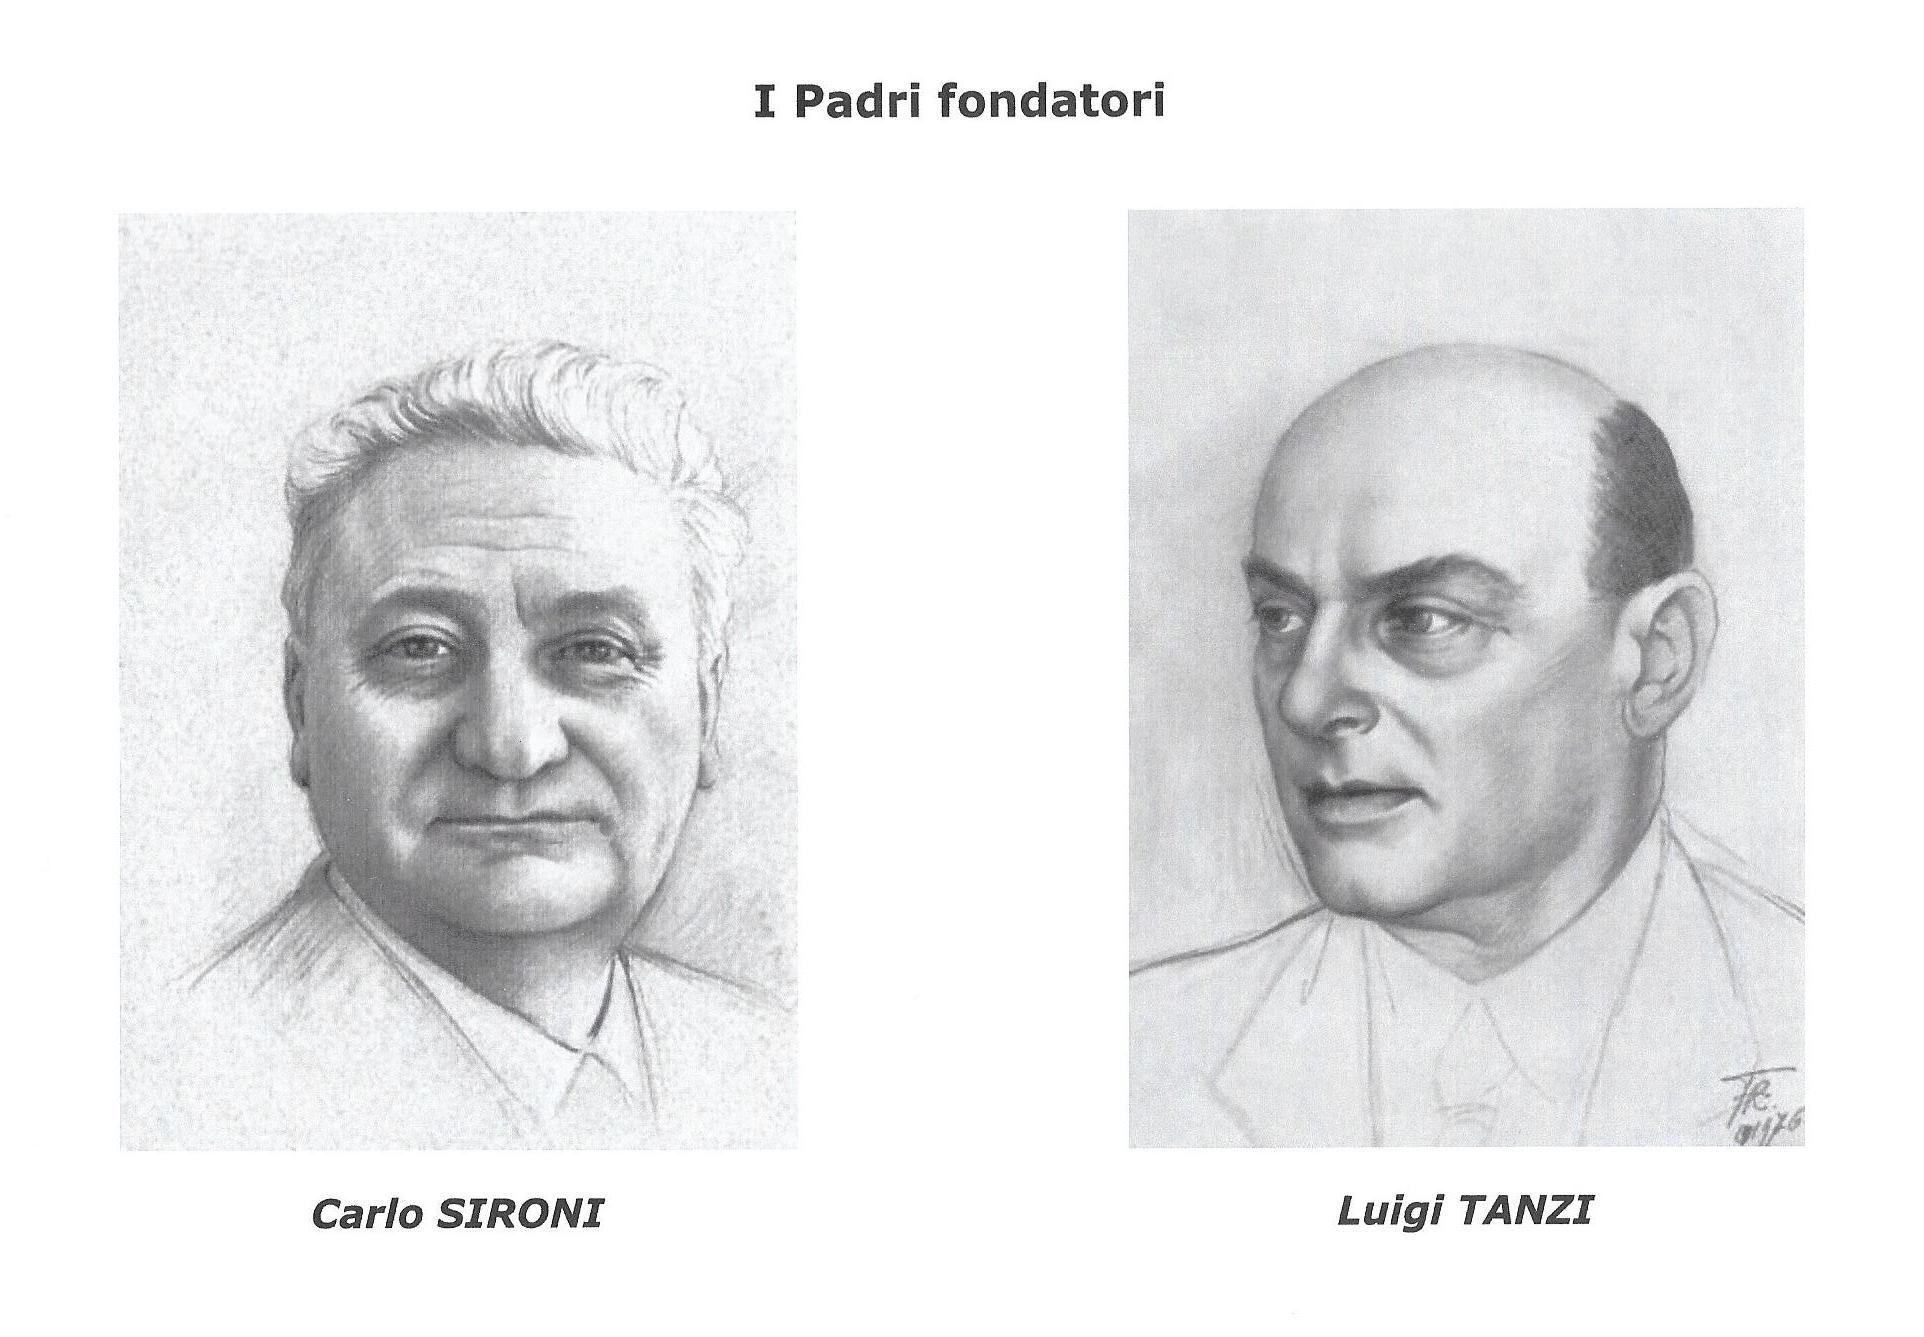 Carlo Sironi e Luigi Tanzi